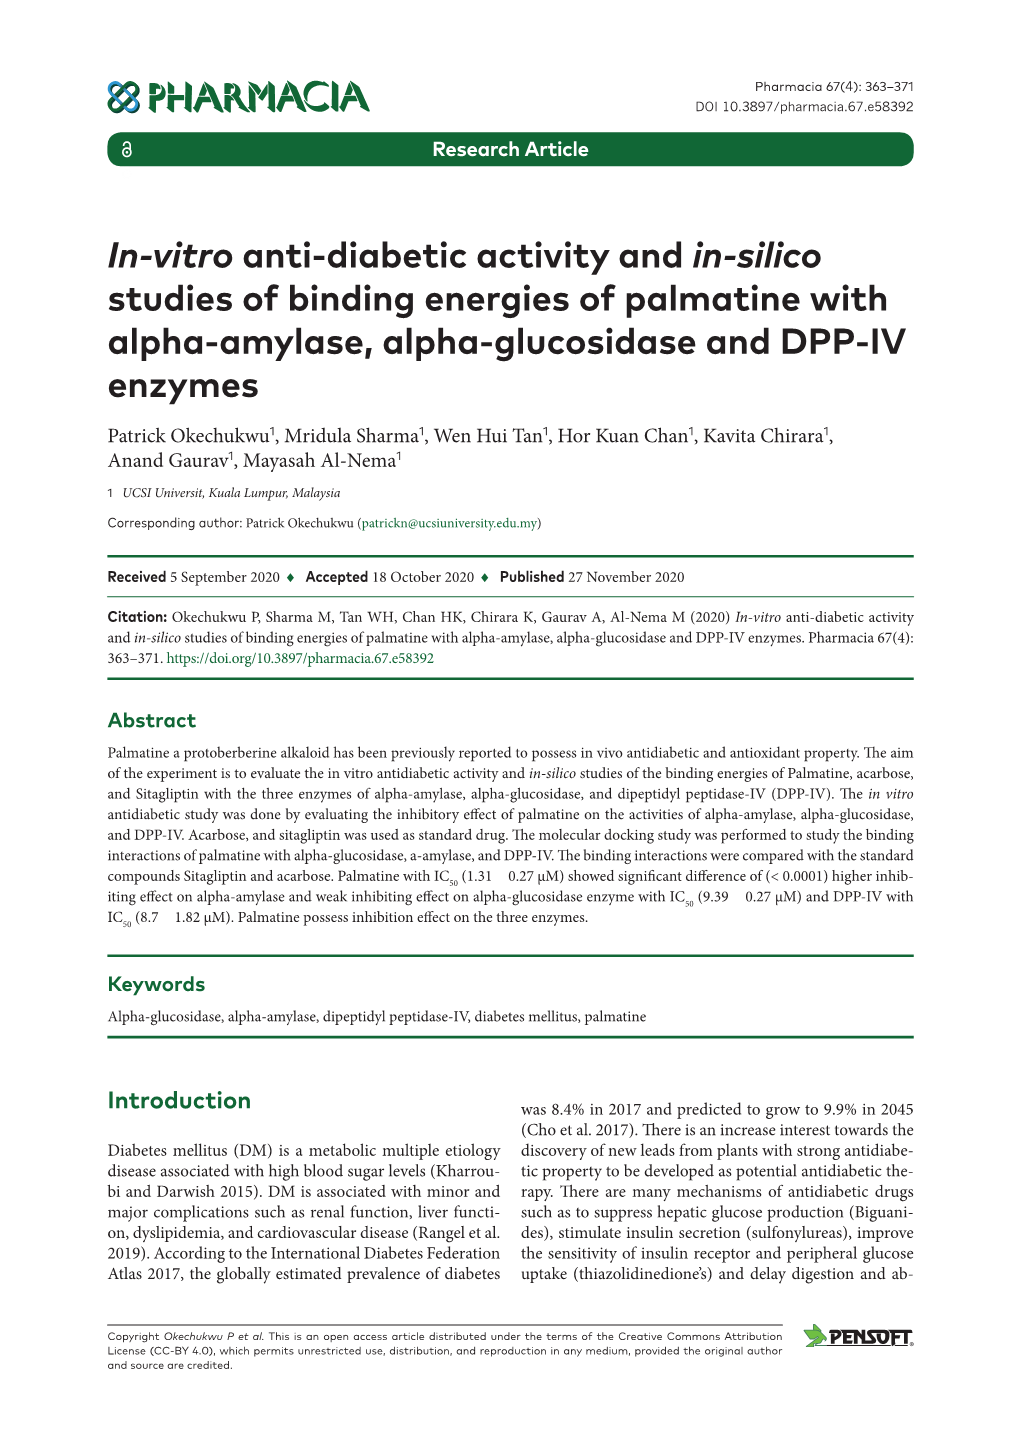 ﻿In-Vitro Anti-Diabetic Activity and In-Silico Studies of Binding Energies